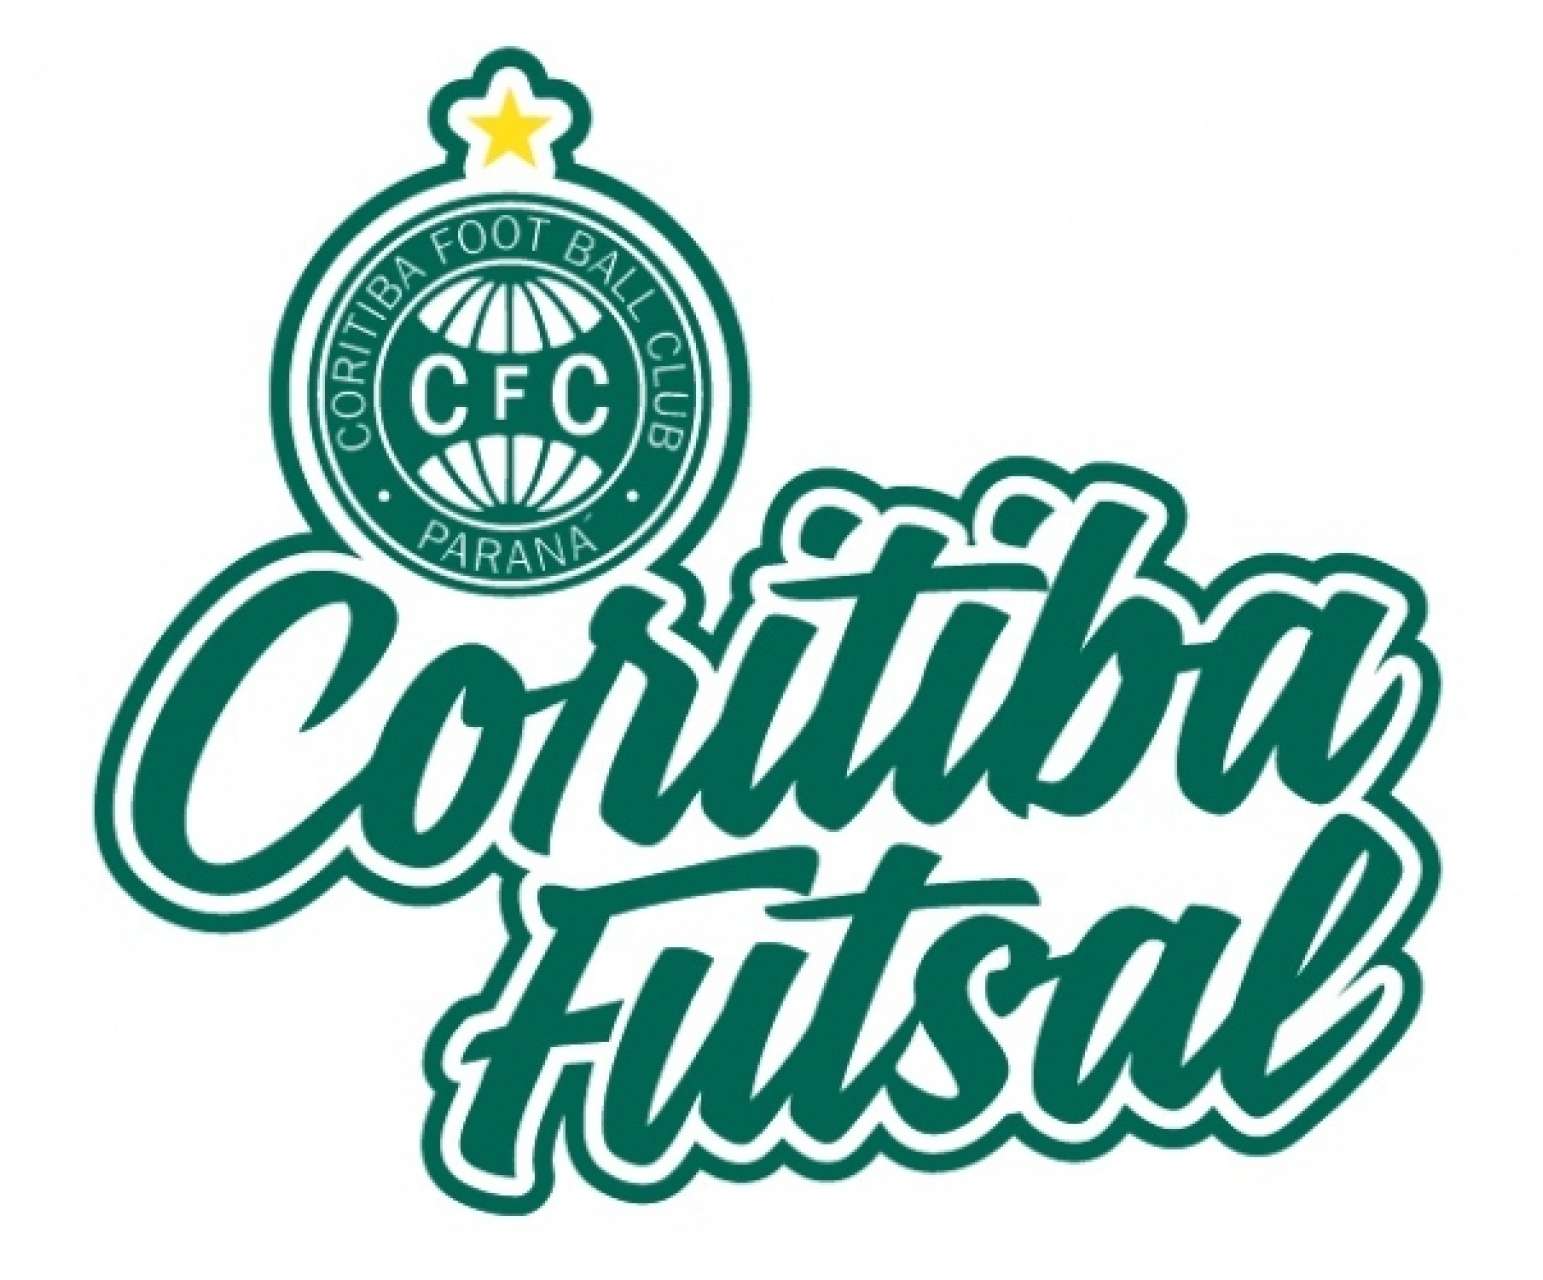 Coxa Futsal busca a vitria